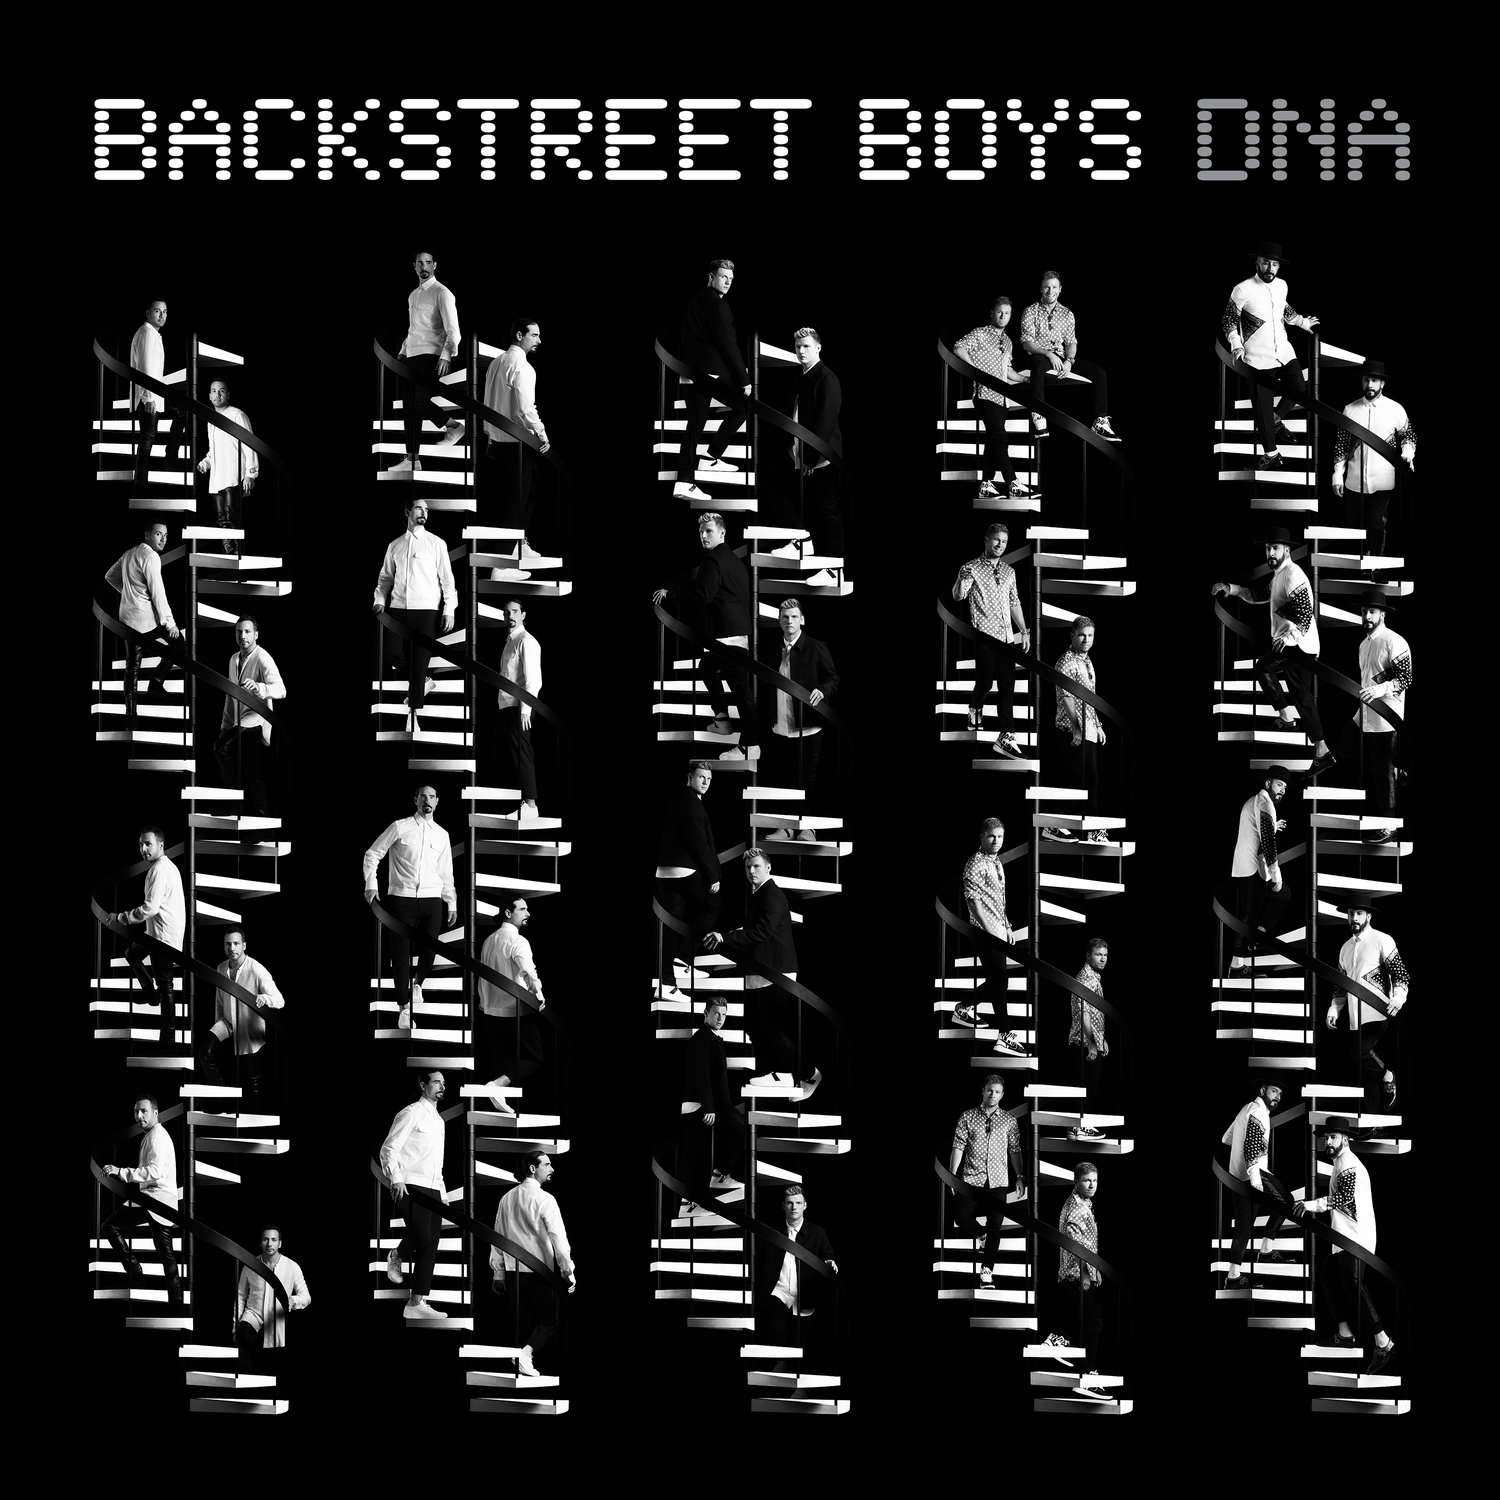 backstreet boys dna album download